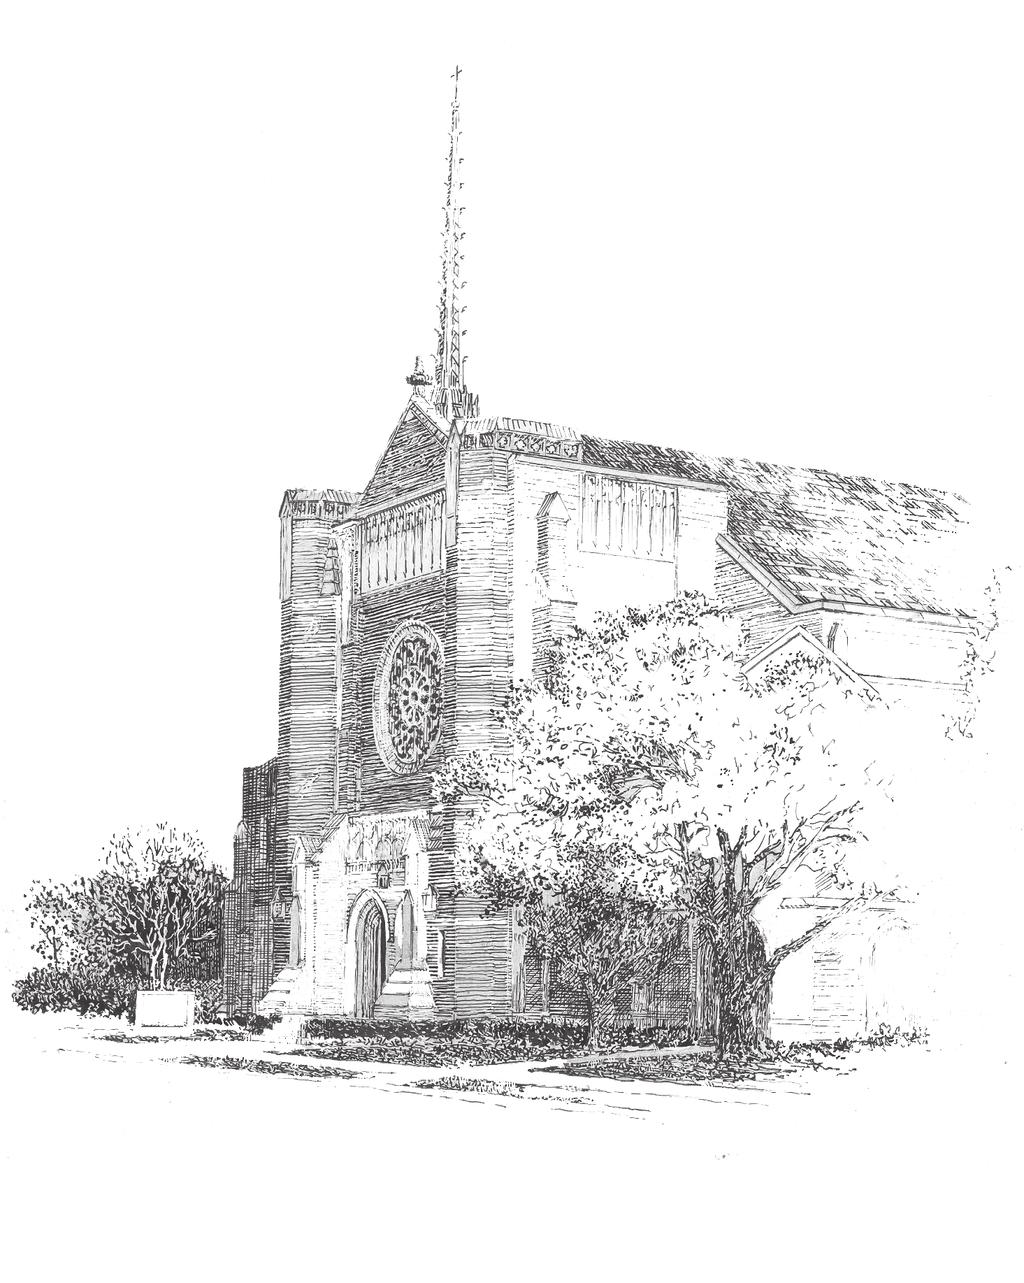 Park Cities Presbyterian Church